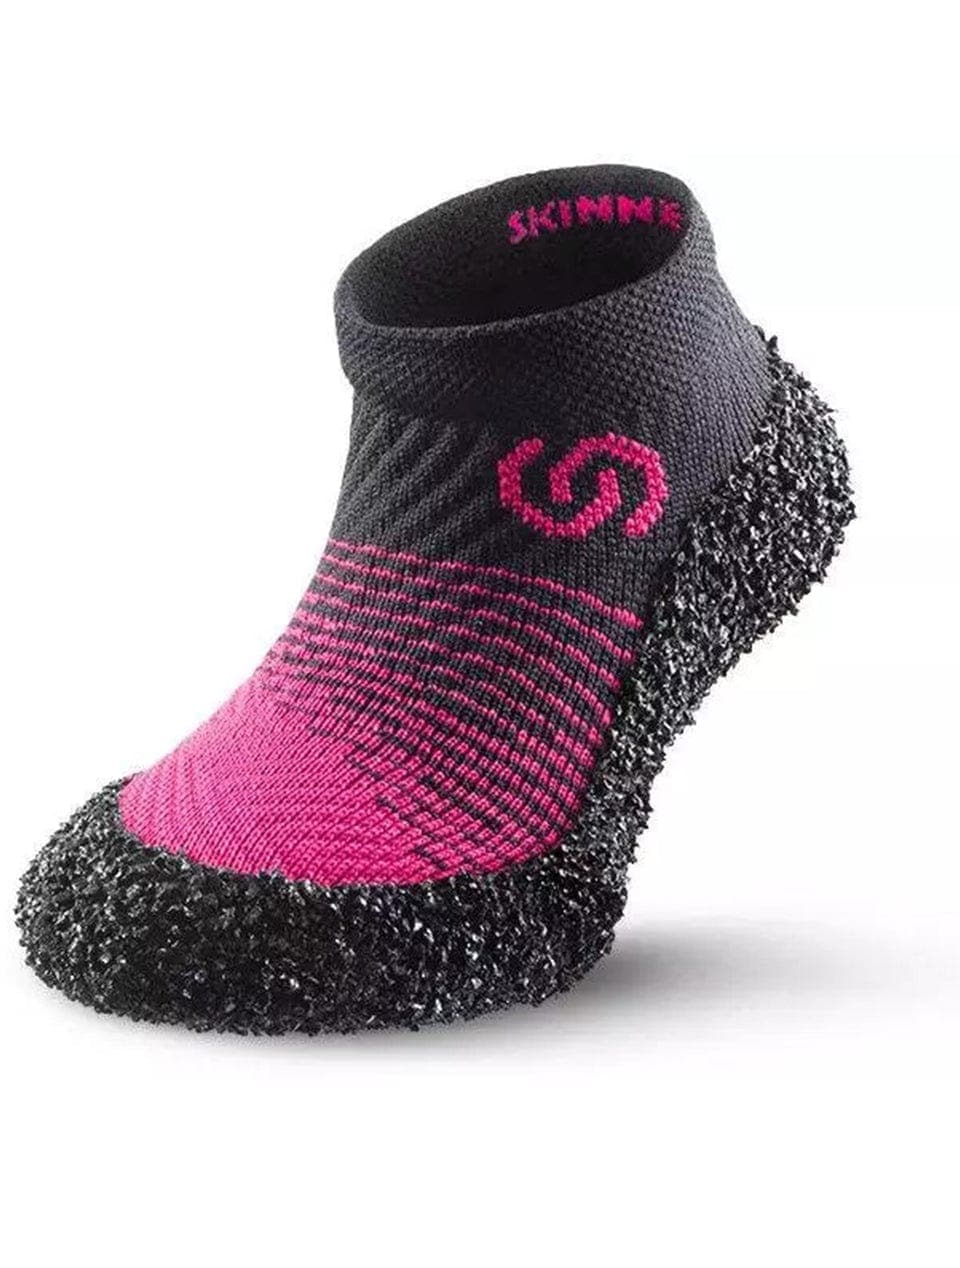 PRSAE (EUR 26-27) Skinners 2.0 Minimalist Kids Footwear- Rose